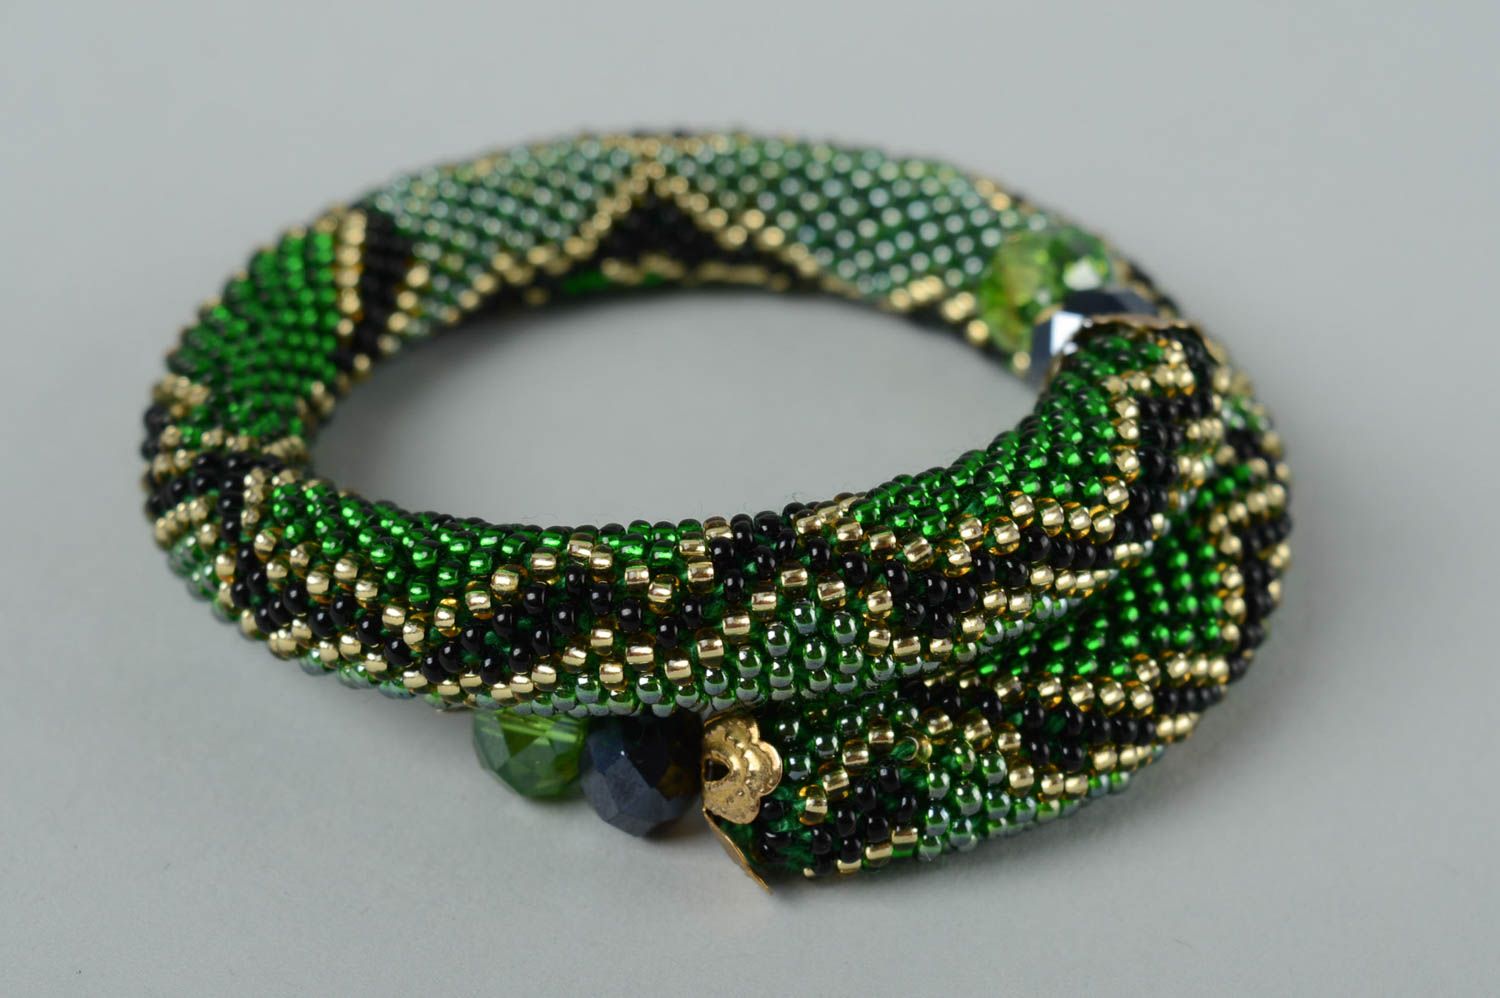 Unusual handmade beaded cord bracelet wrist bracelet designs gifts for her photo 4